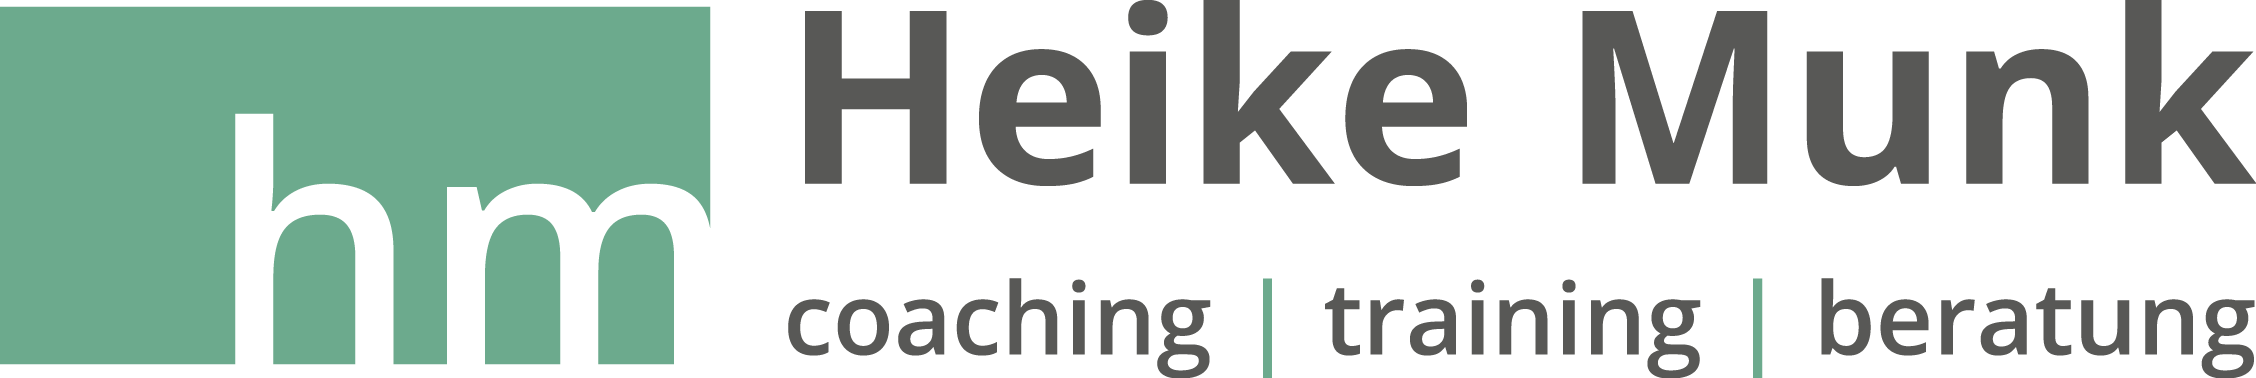 Heike Munk - Coaching